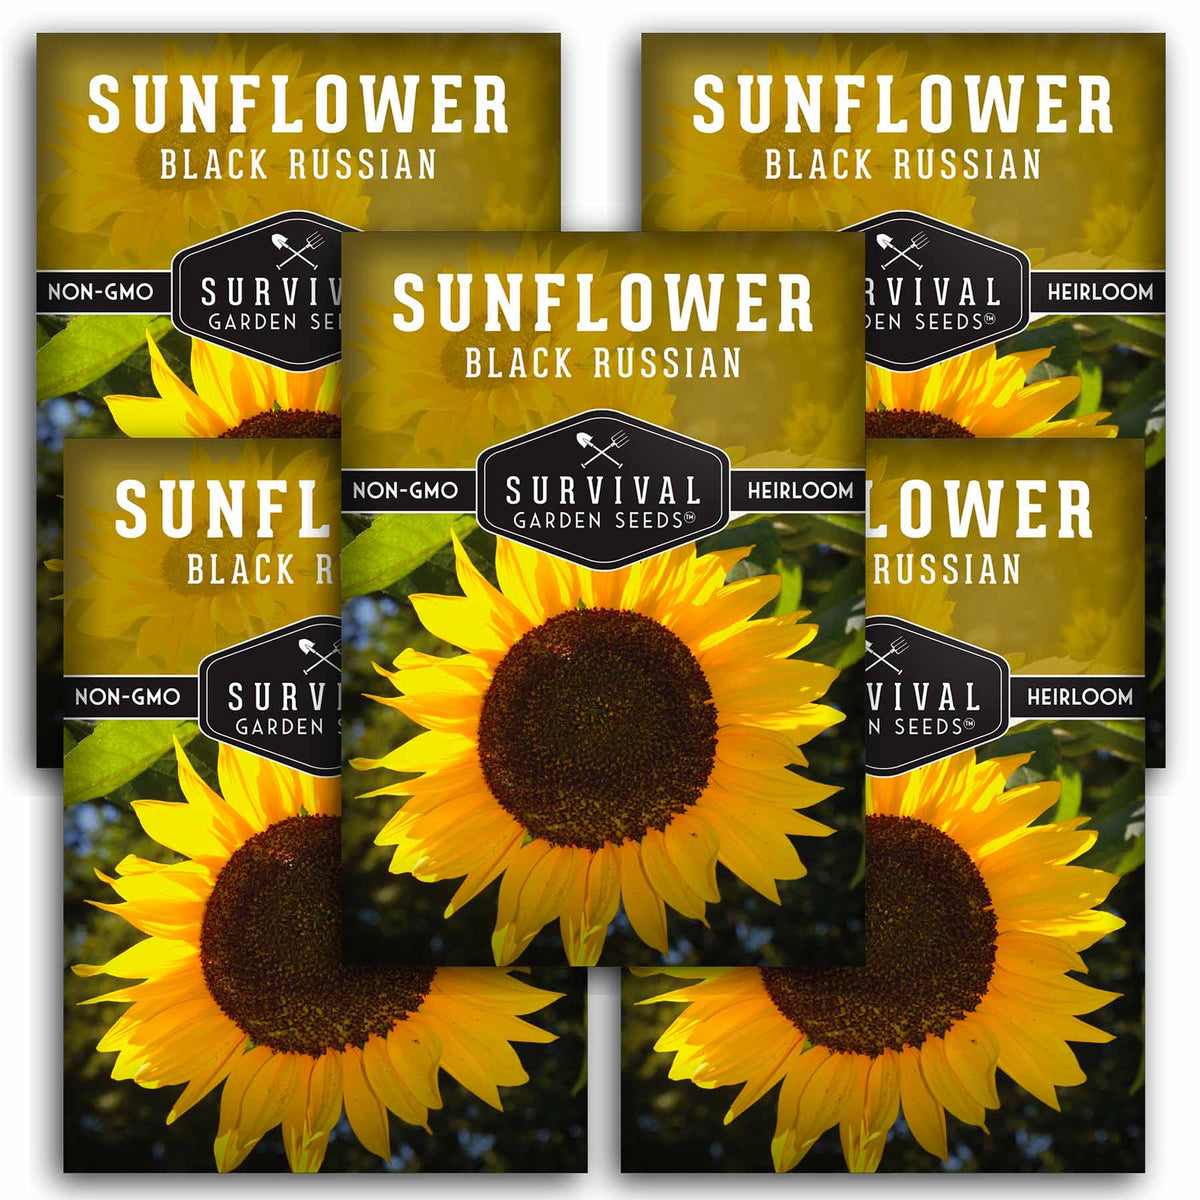 5 packets of Black Russian Sunflower seeds